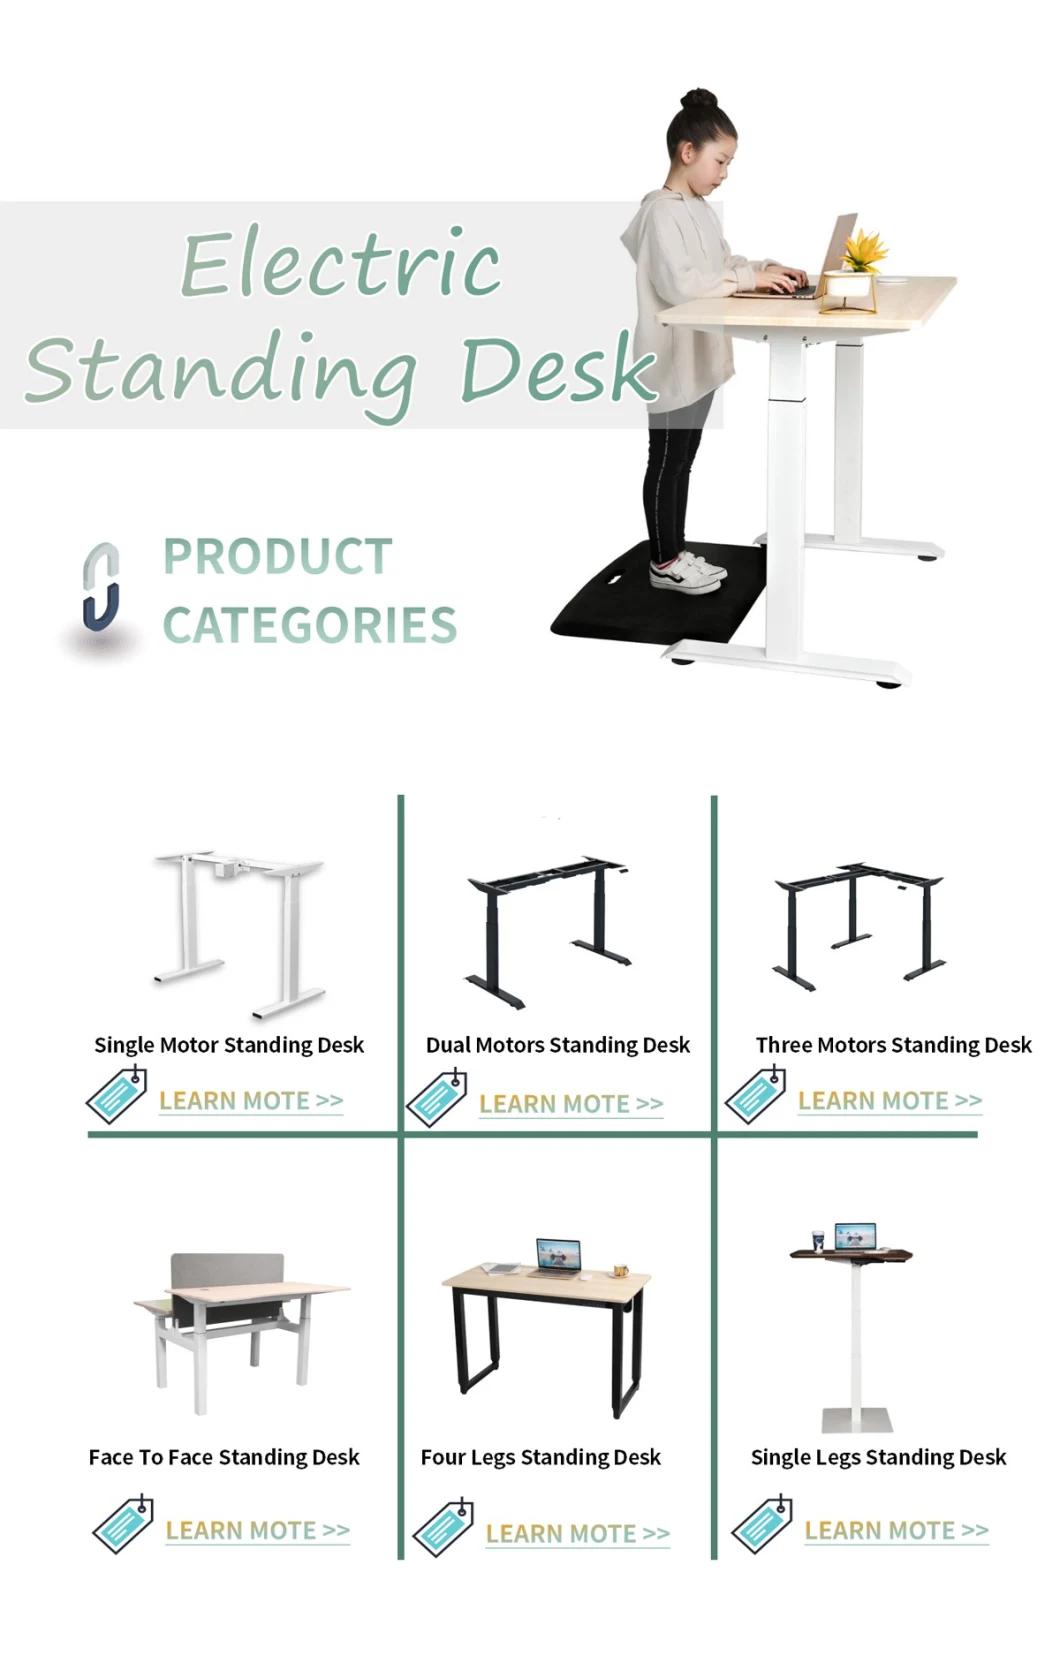 Hot Sale Wholesale ODM OEM Home Office Ergonomic Hieght Adjustable Sit Stand Standing Manual Hand Crank Desk